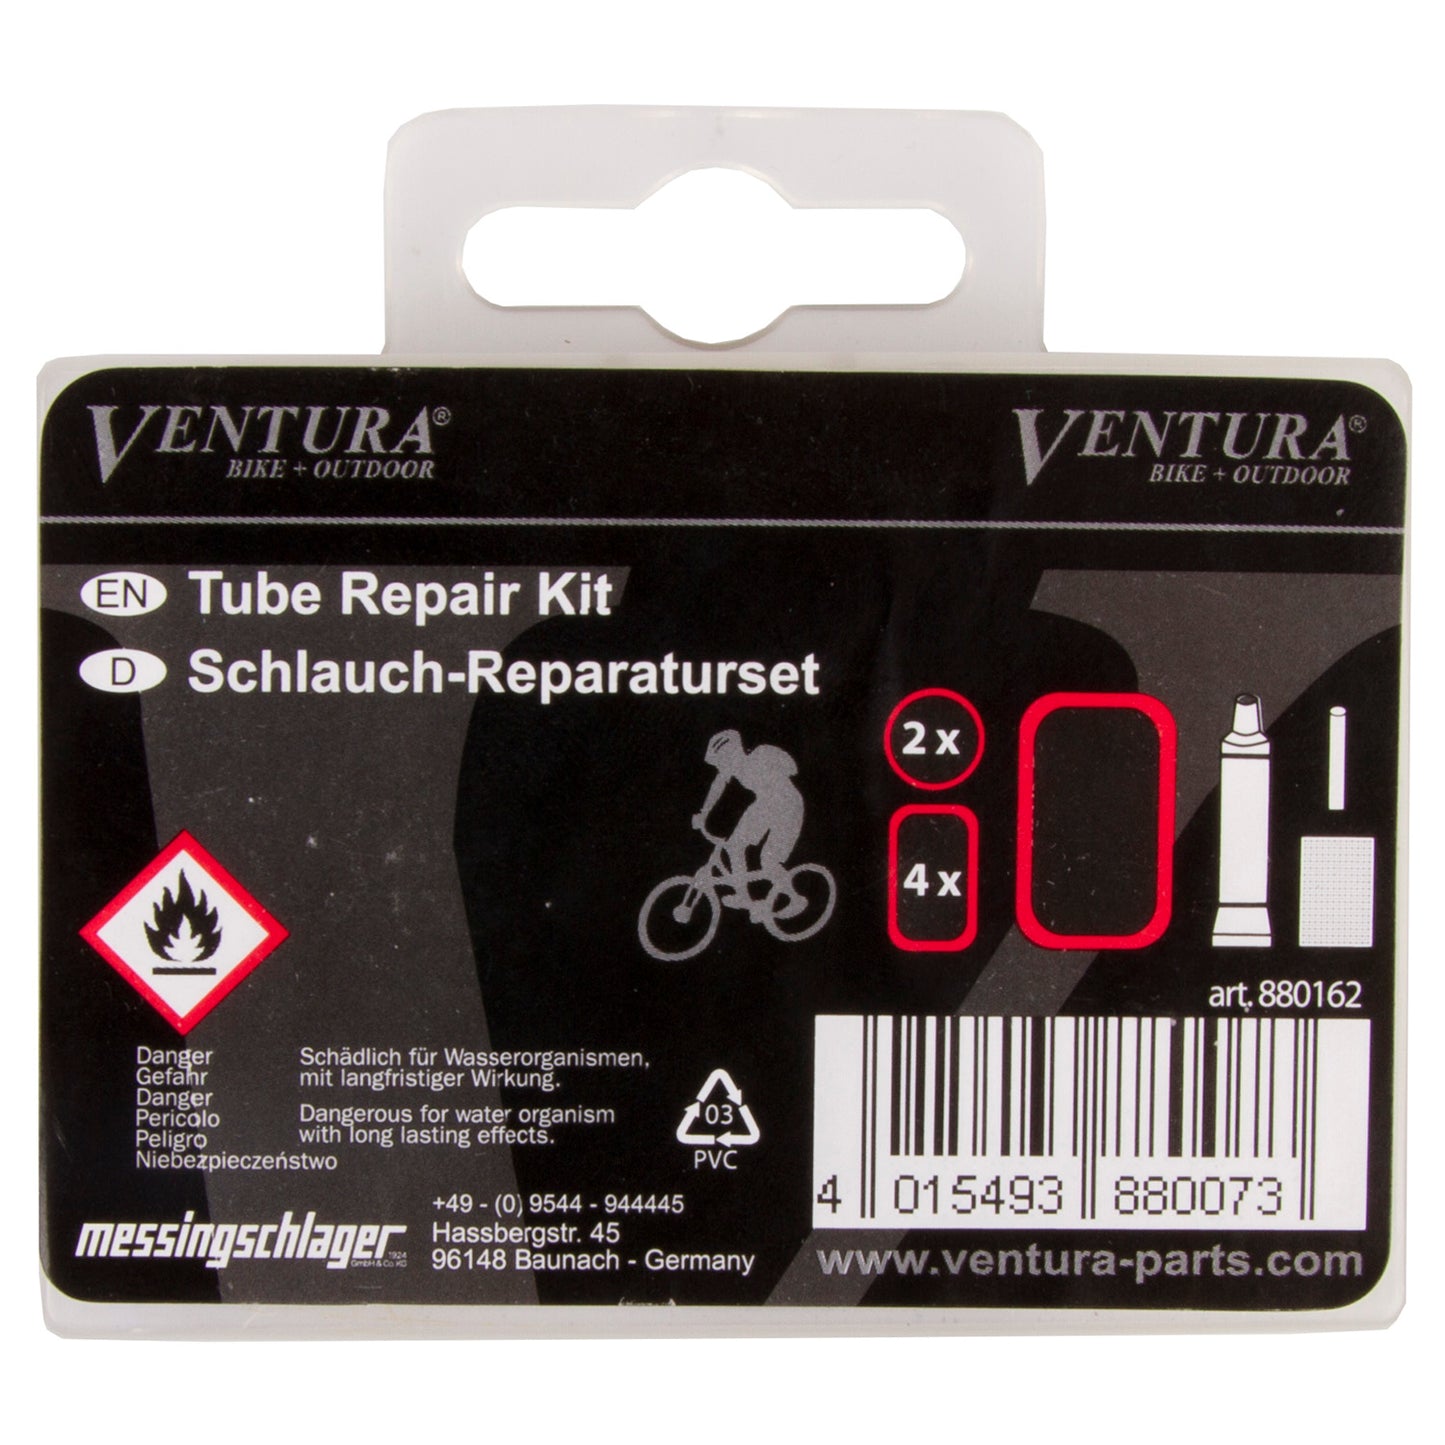 VENTURA tire repair kit